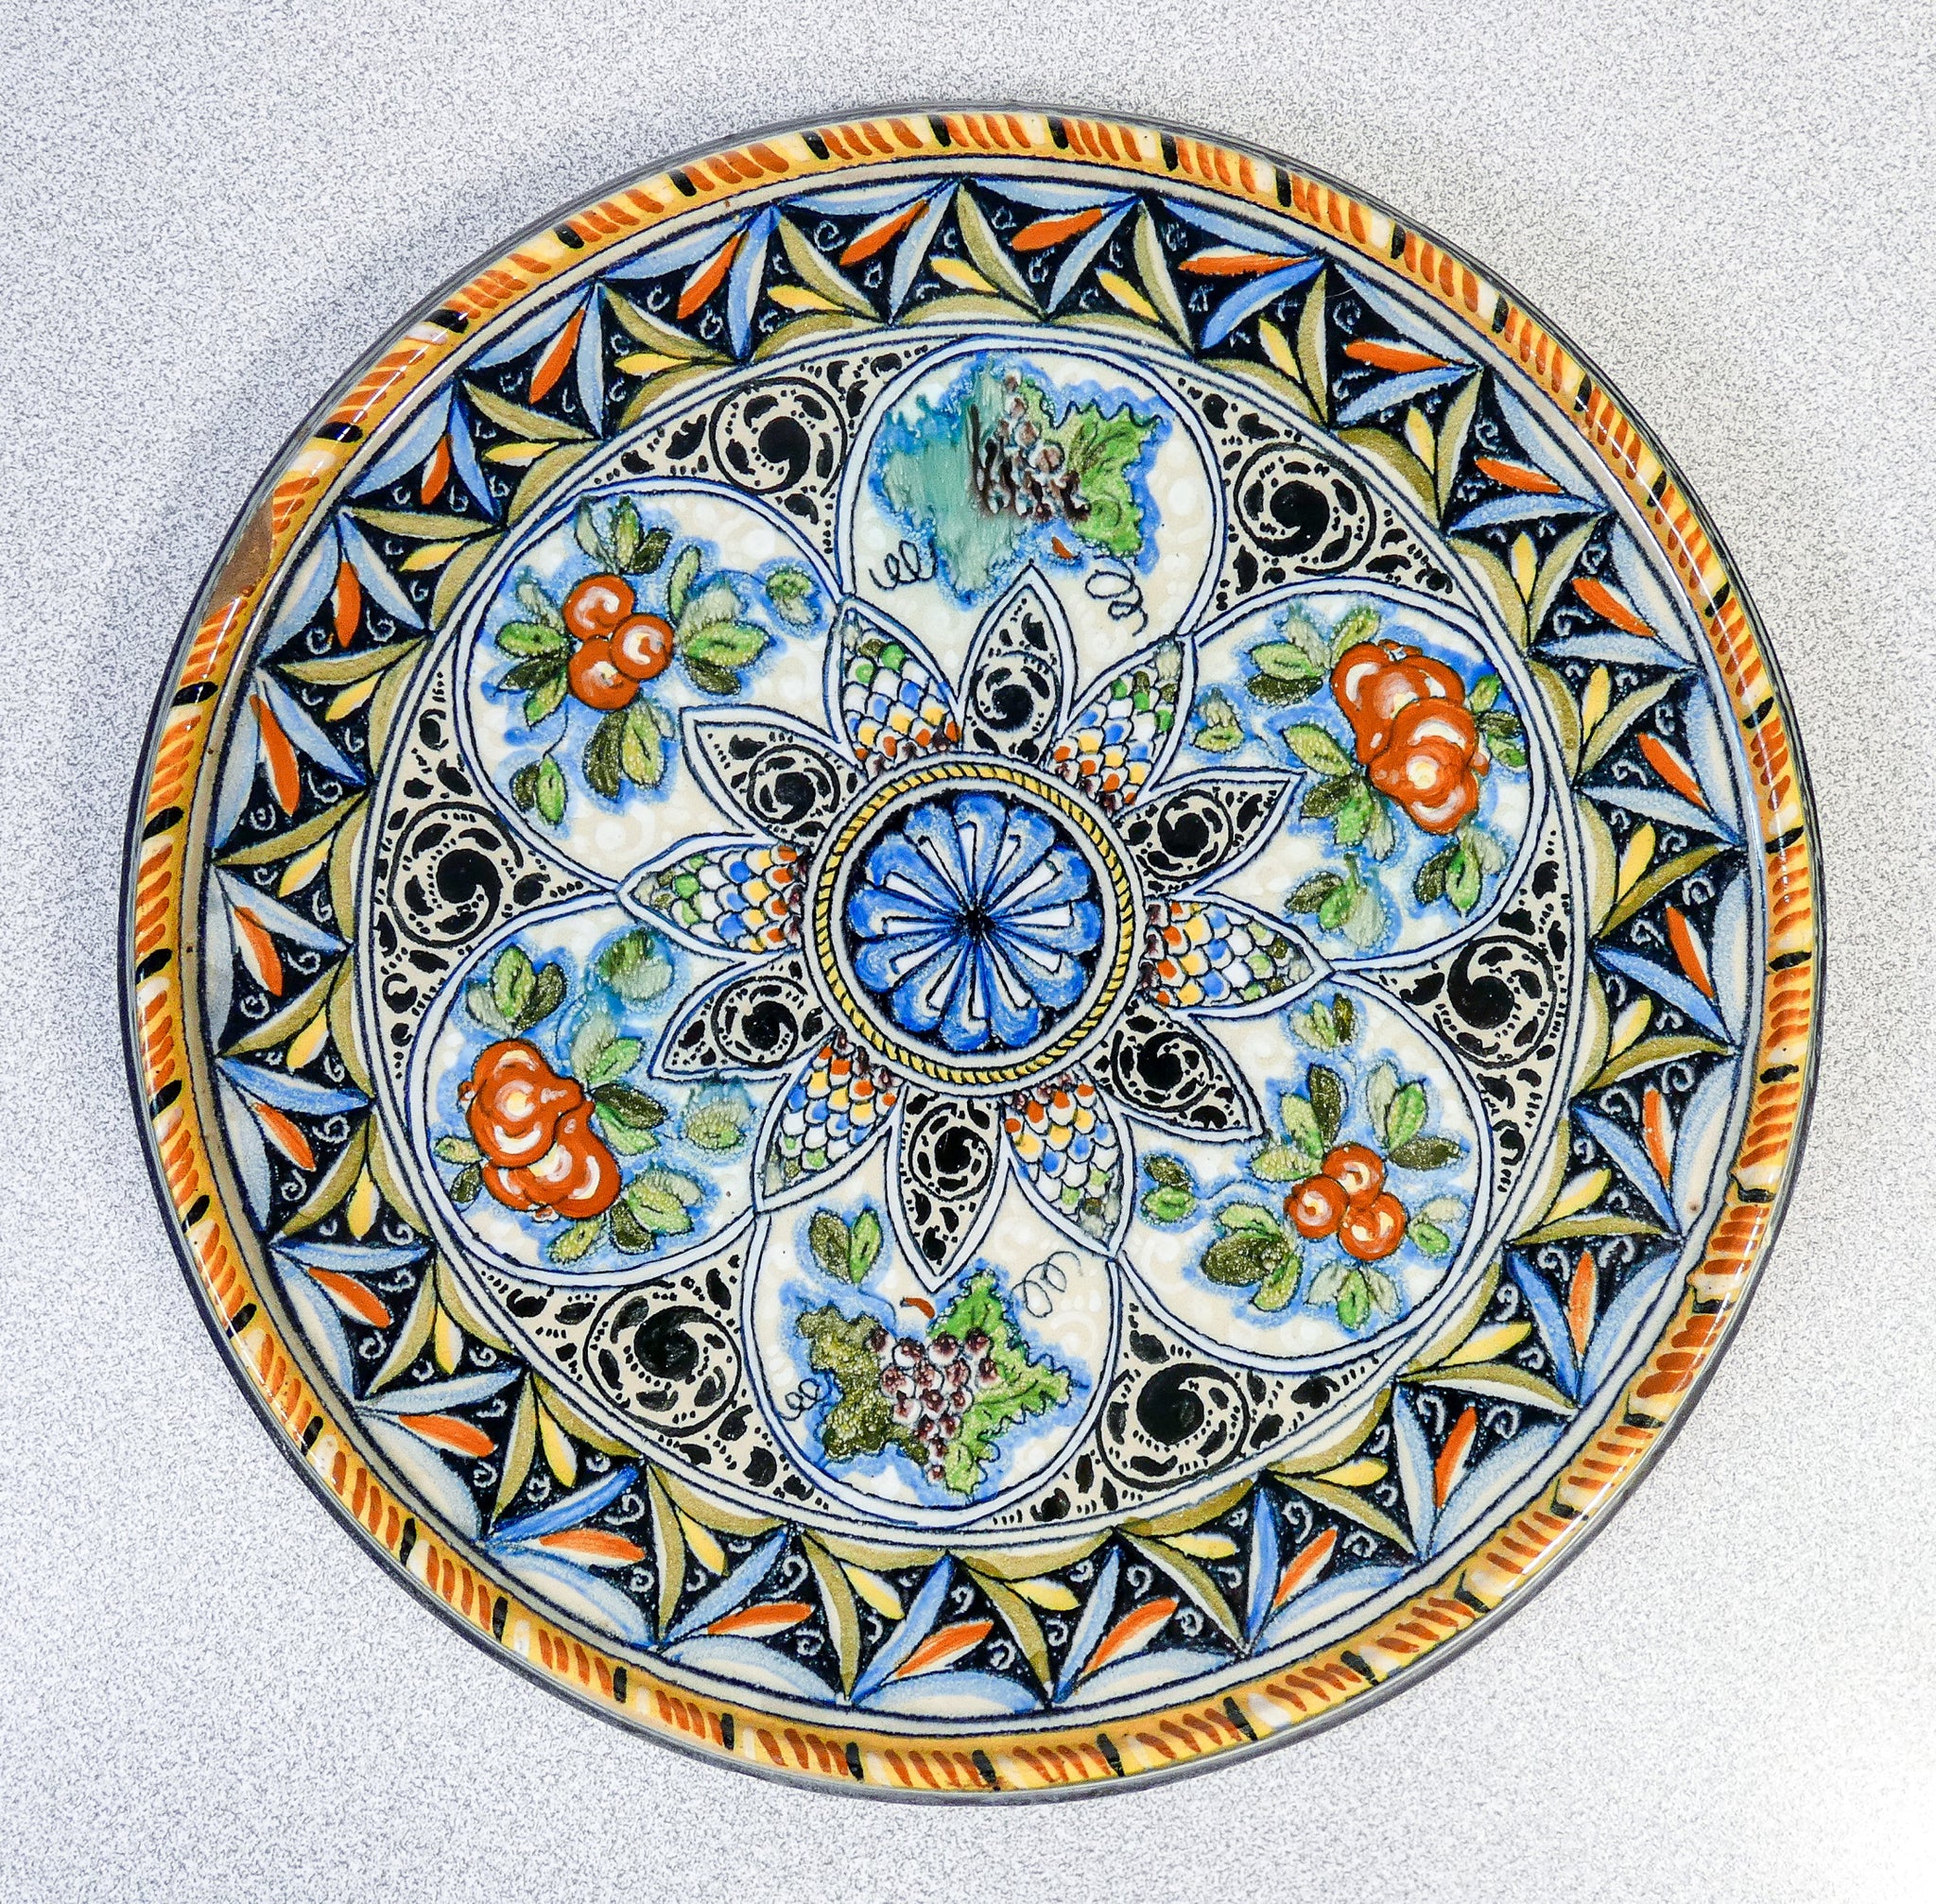 piatto sottopentola vassoio maiolica dipinta a mano ceramica vintage italia